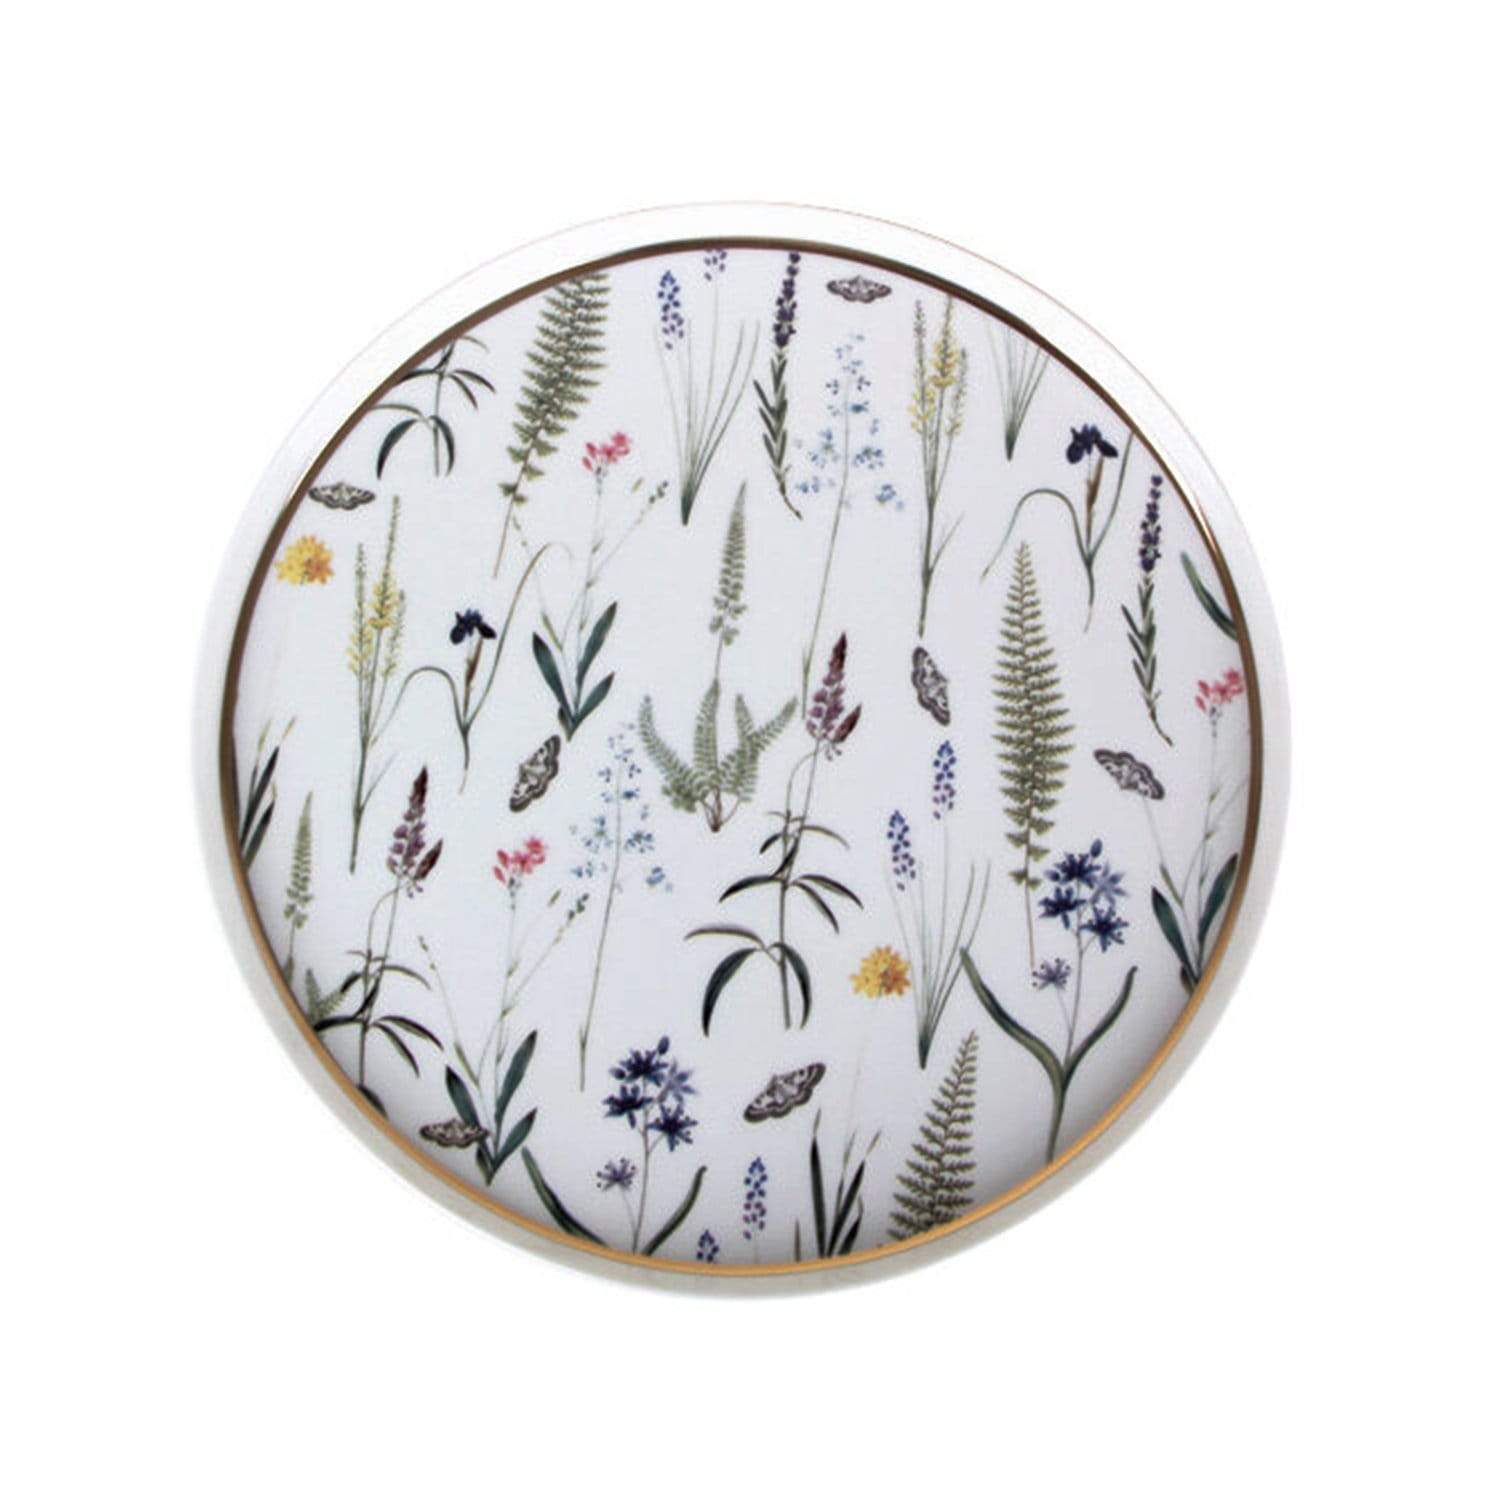 Porland Porselen Botanical Flat Plate - 27 cm - 04ALM005048 - Jashanmal Home